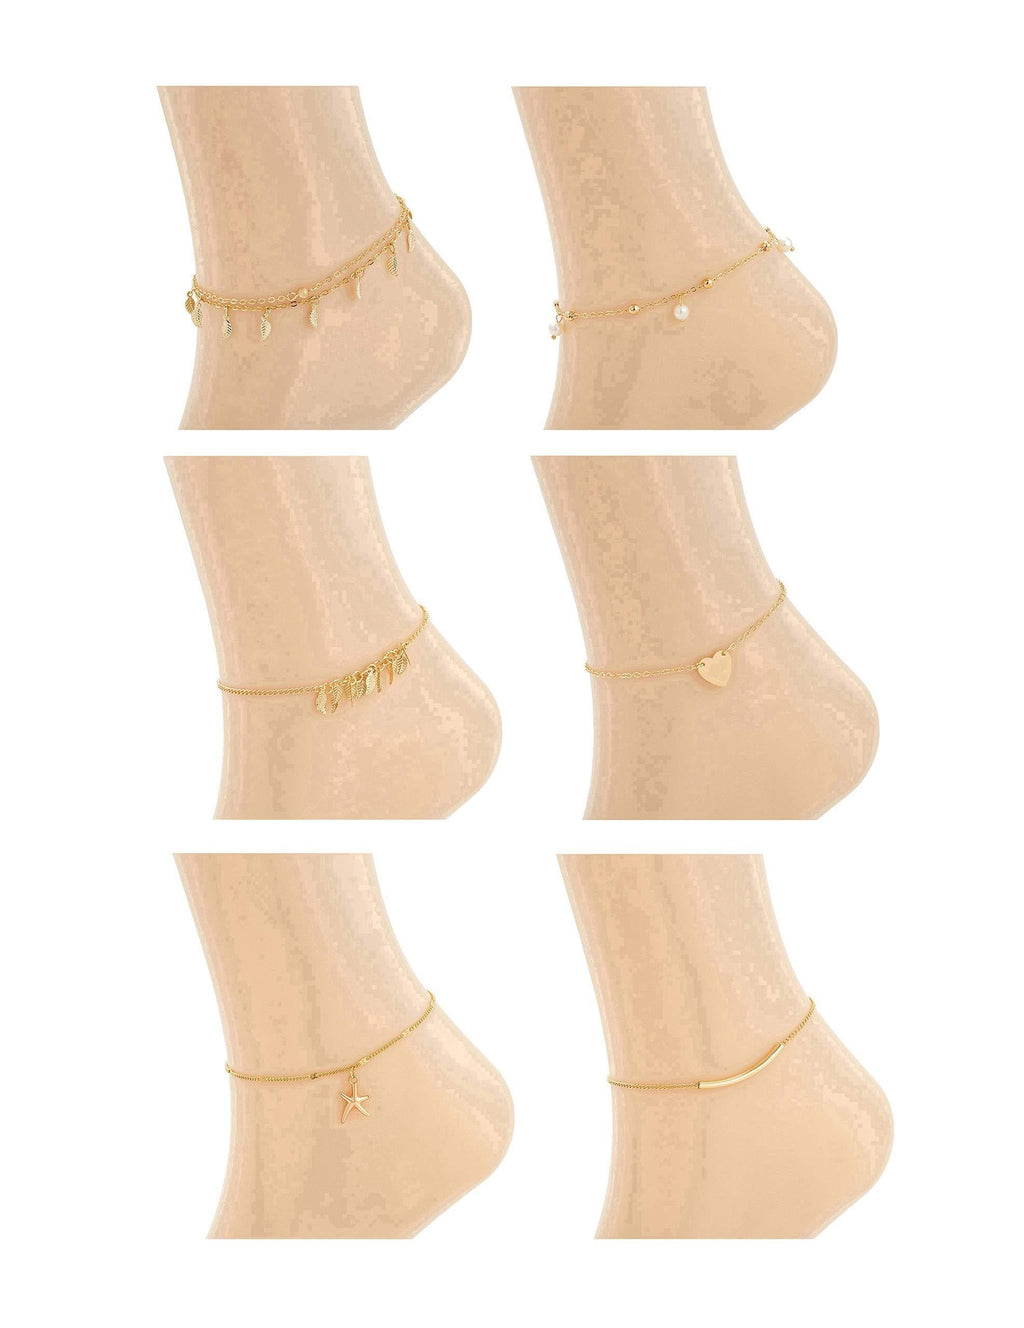 [Australia] - REVOLIA 6Pcs Charm Anklets for Women Girls Bracelets Sexy Beach Anklets Foot Jewelry Adjustable A.6 Pcs 